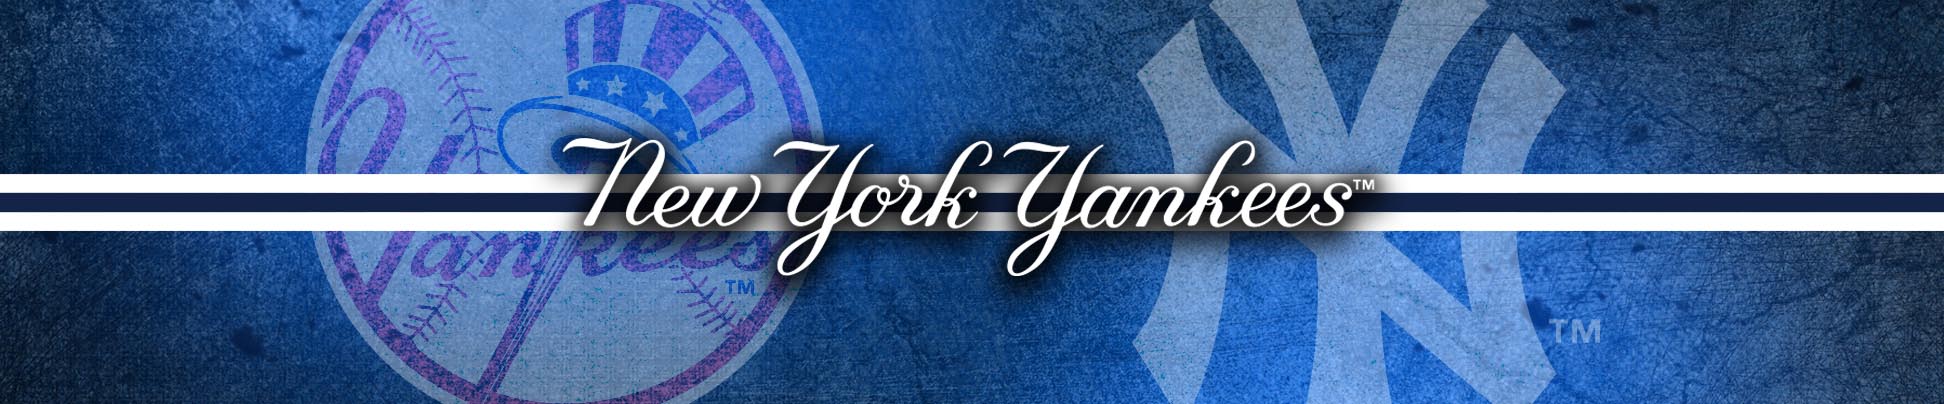 NY Yankees Memorabilia. New York Yankee Collectibles